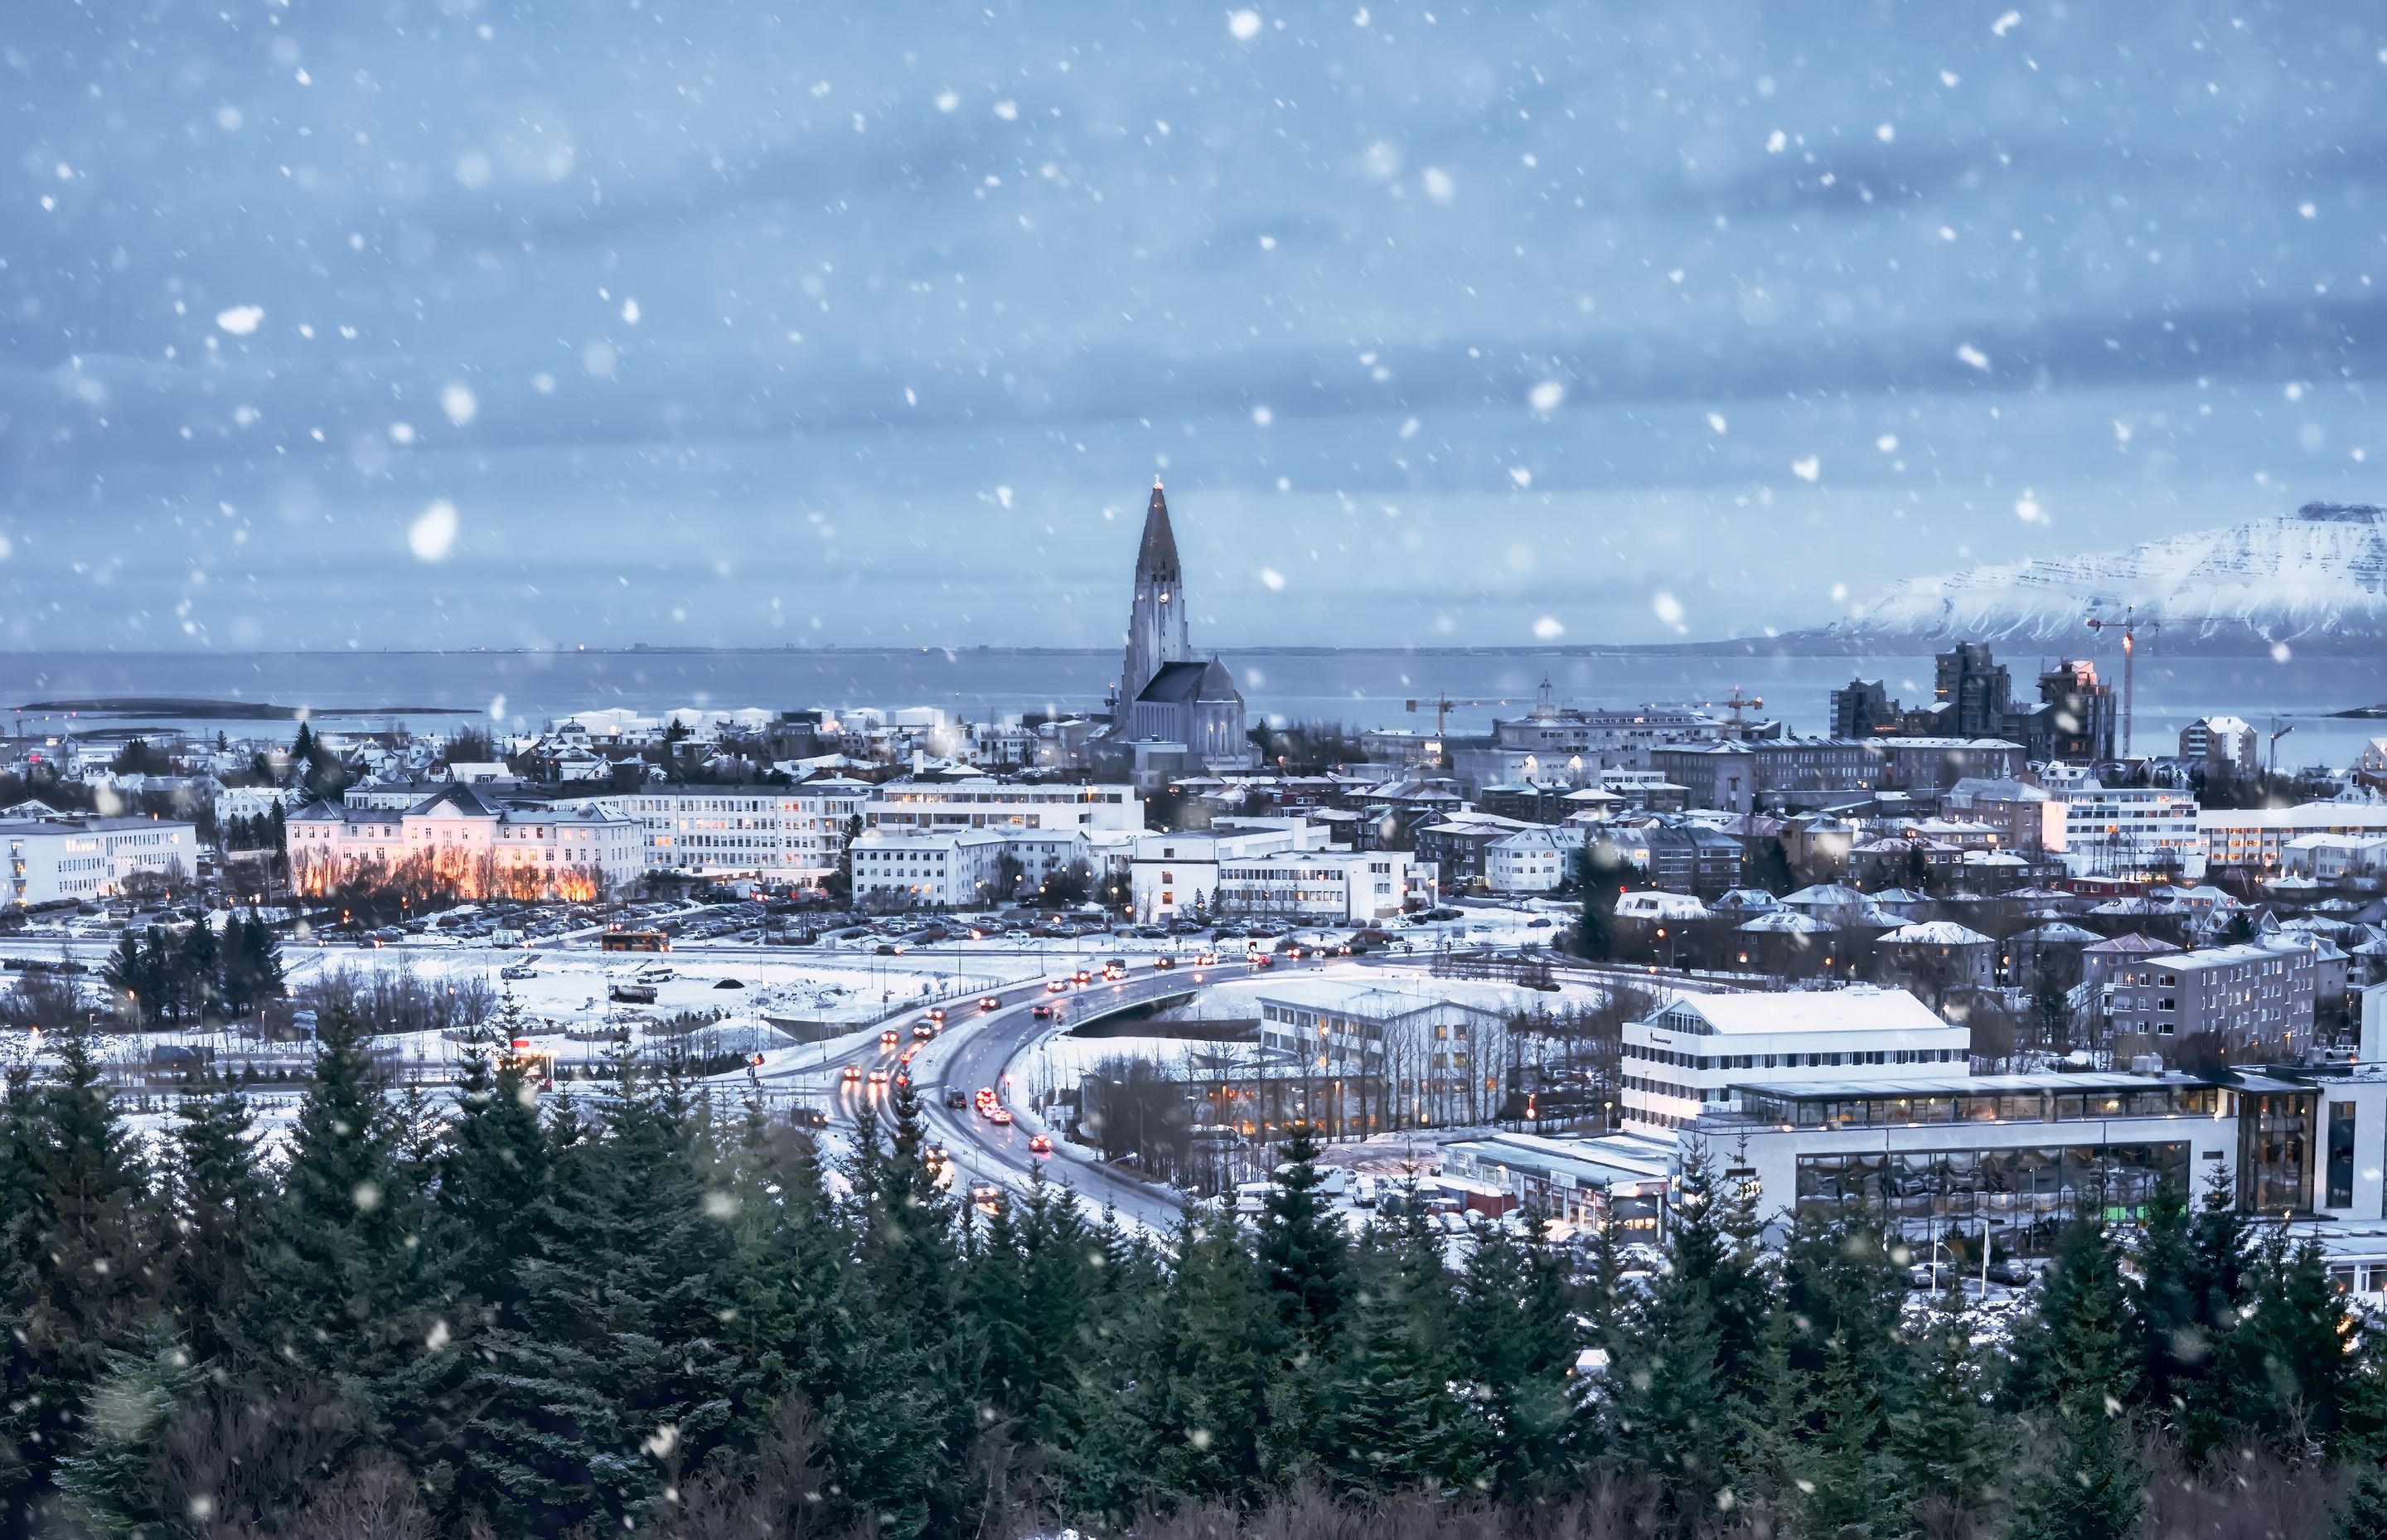 A snowy view of Reykjavik Iceland with Hallgrímskirkja in the background